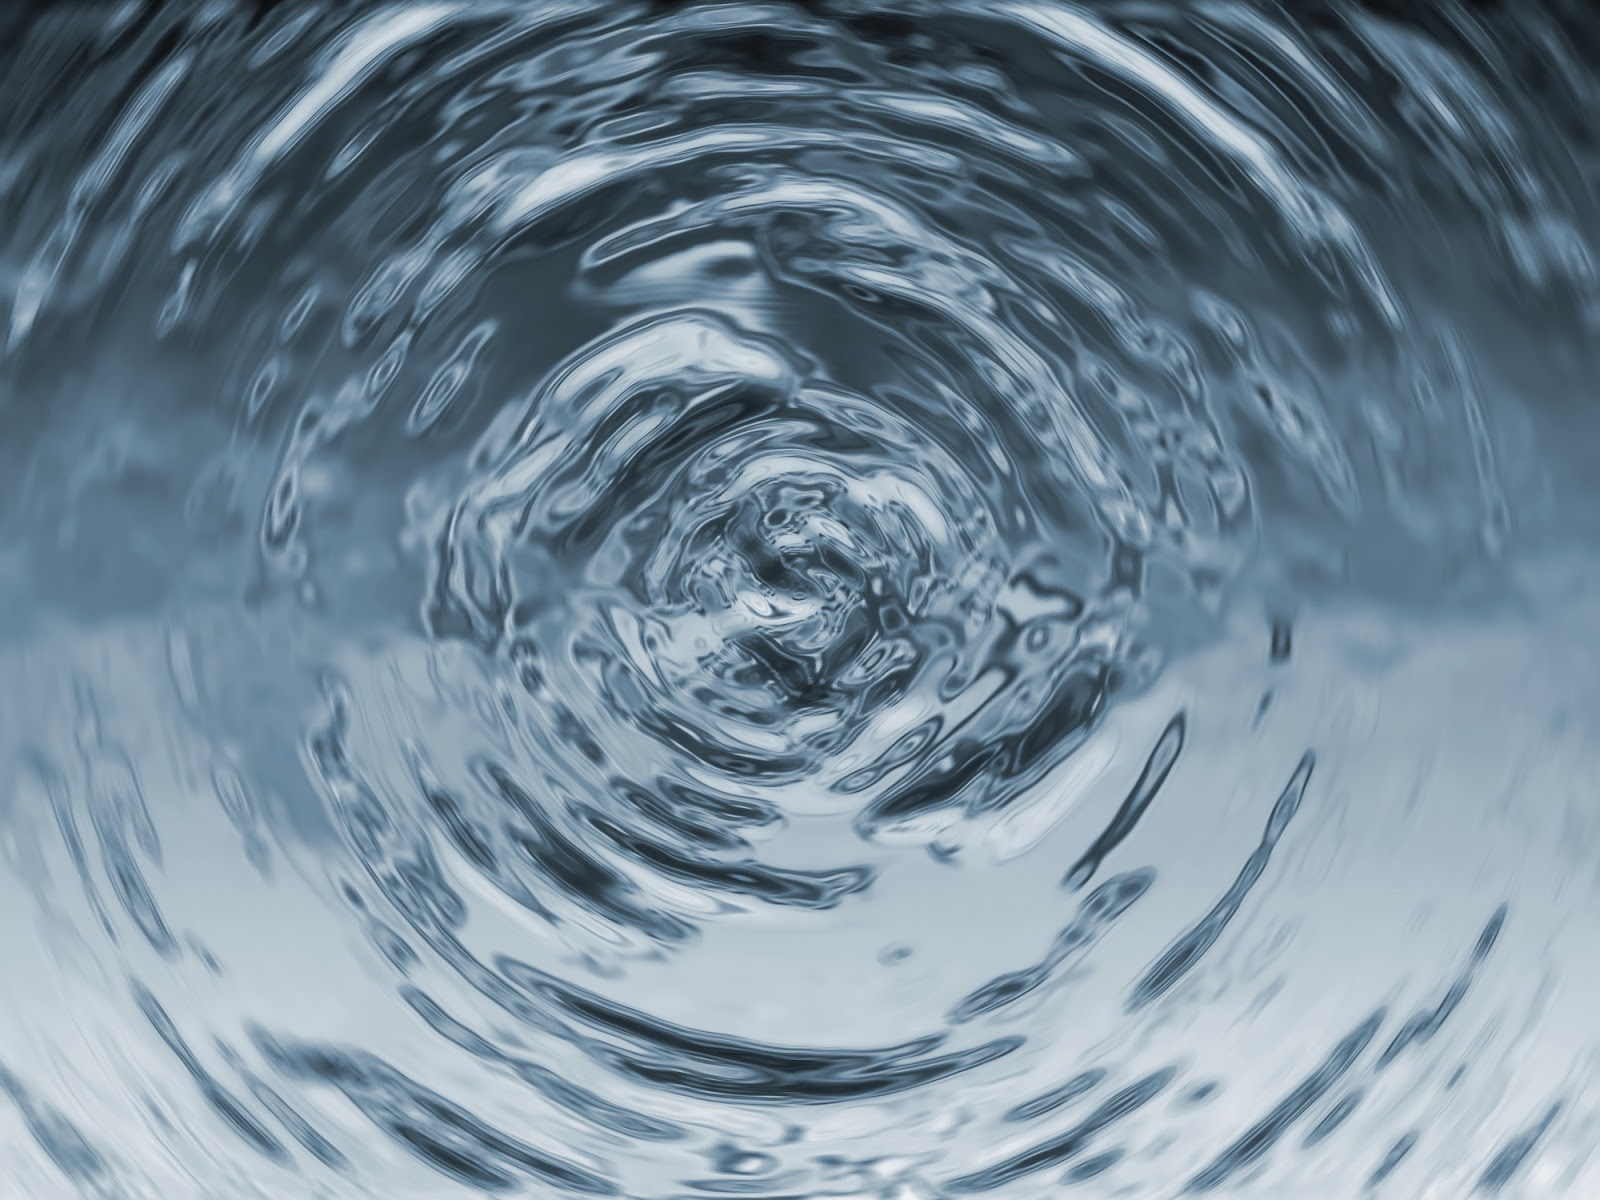 SAMEER RATHORIA: water ripple effect